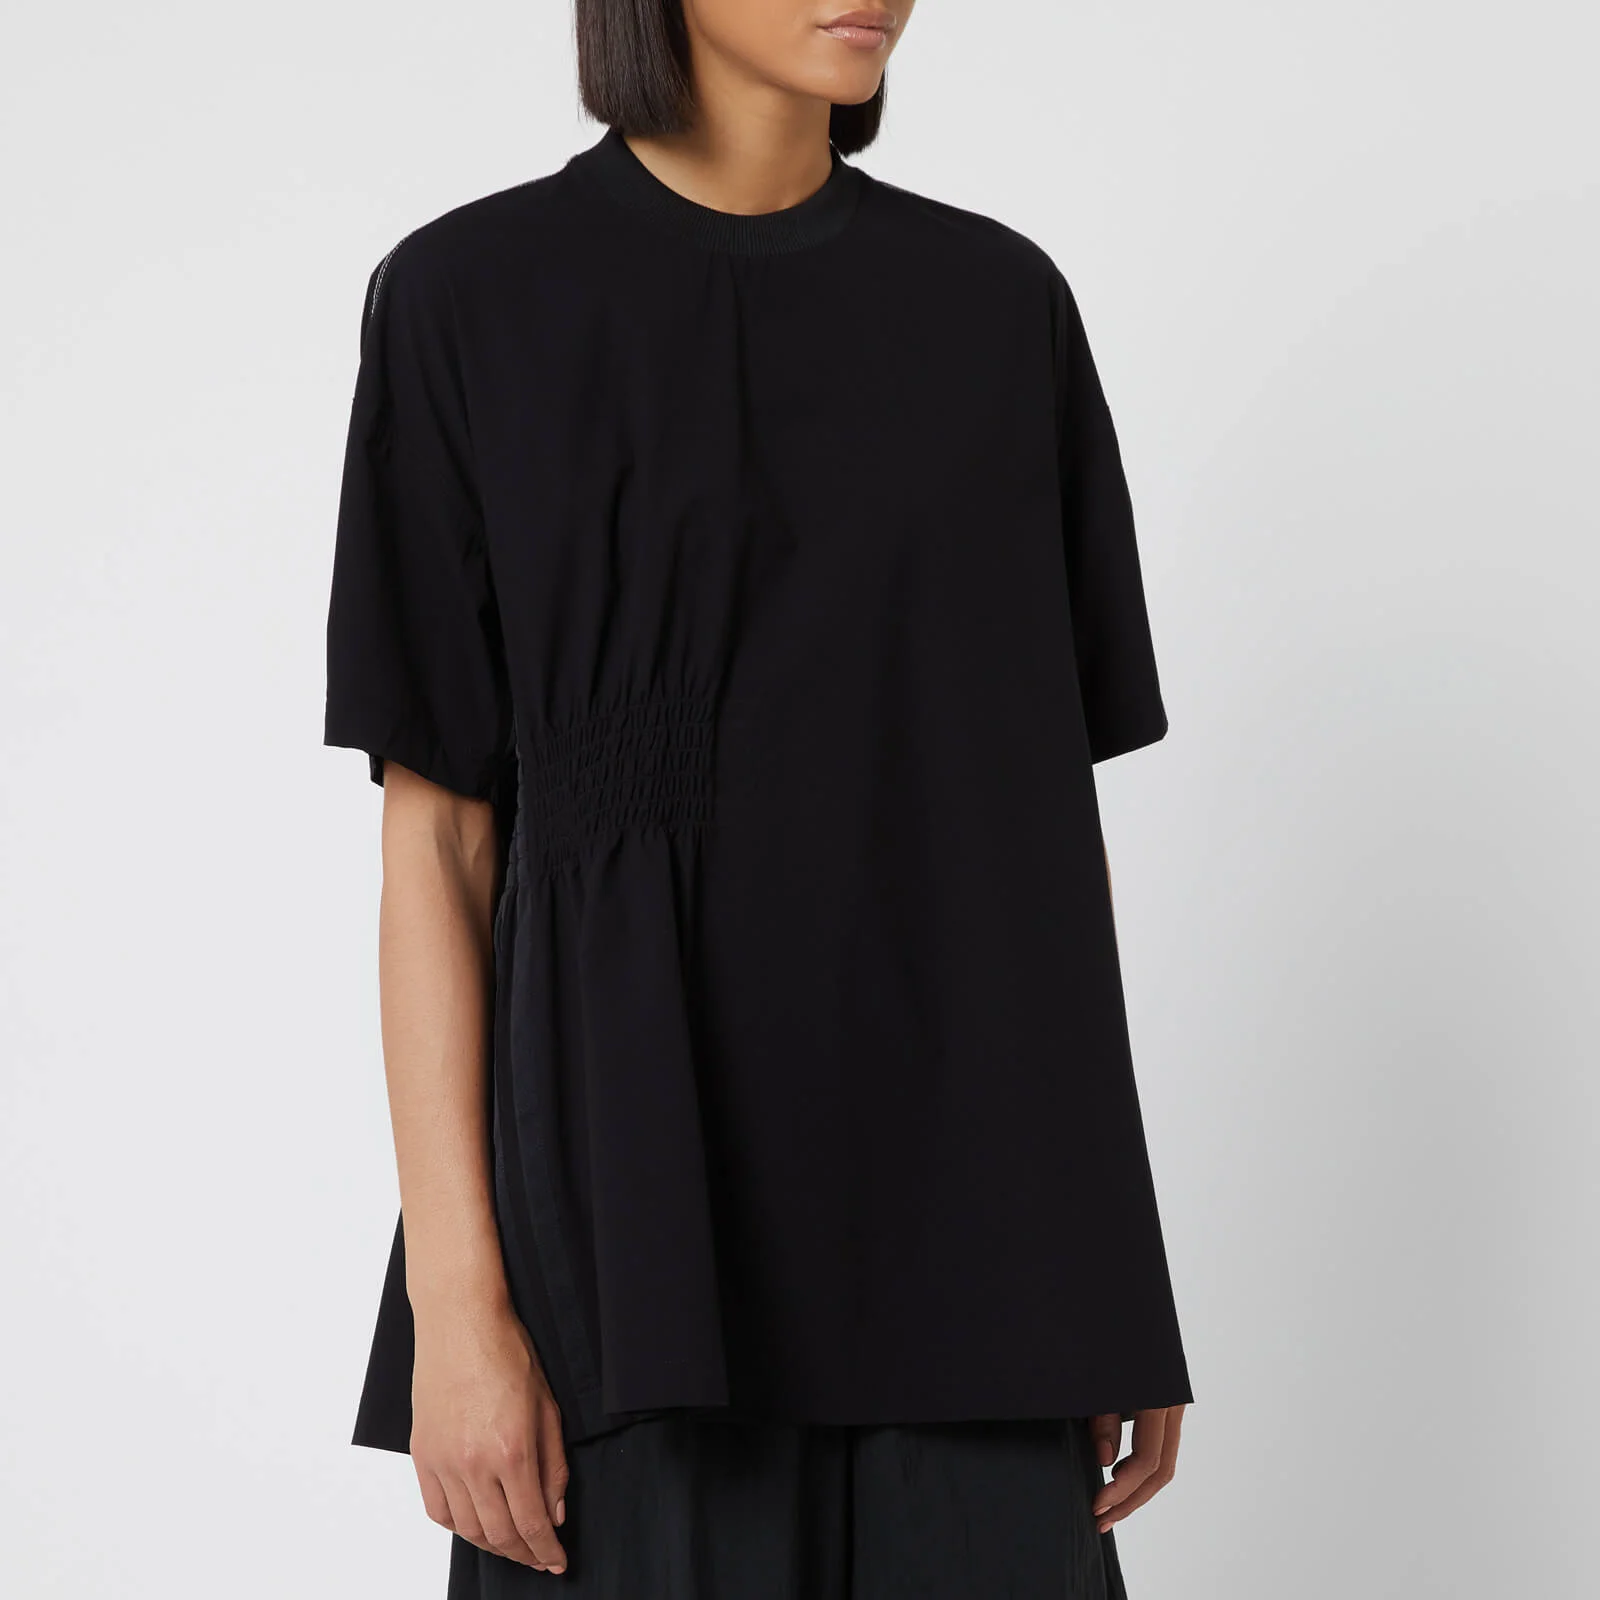 Y-3 Women's Light Nylon 3 Stripe Short Sleeve T-Shirt - Black Image 1